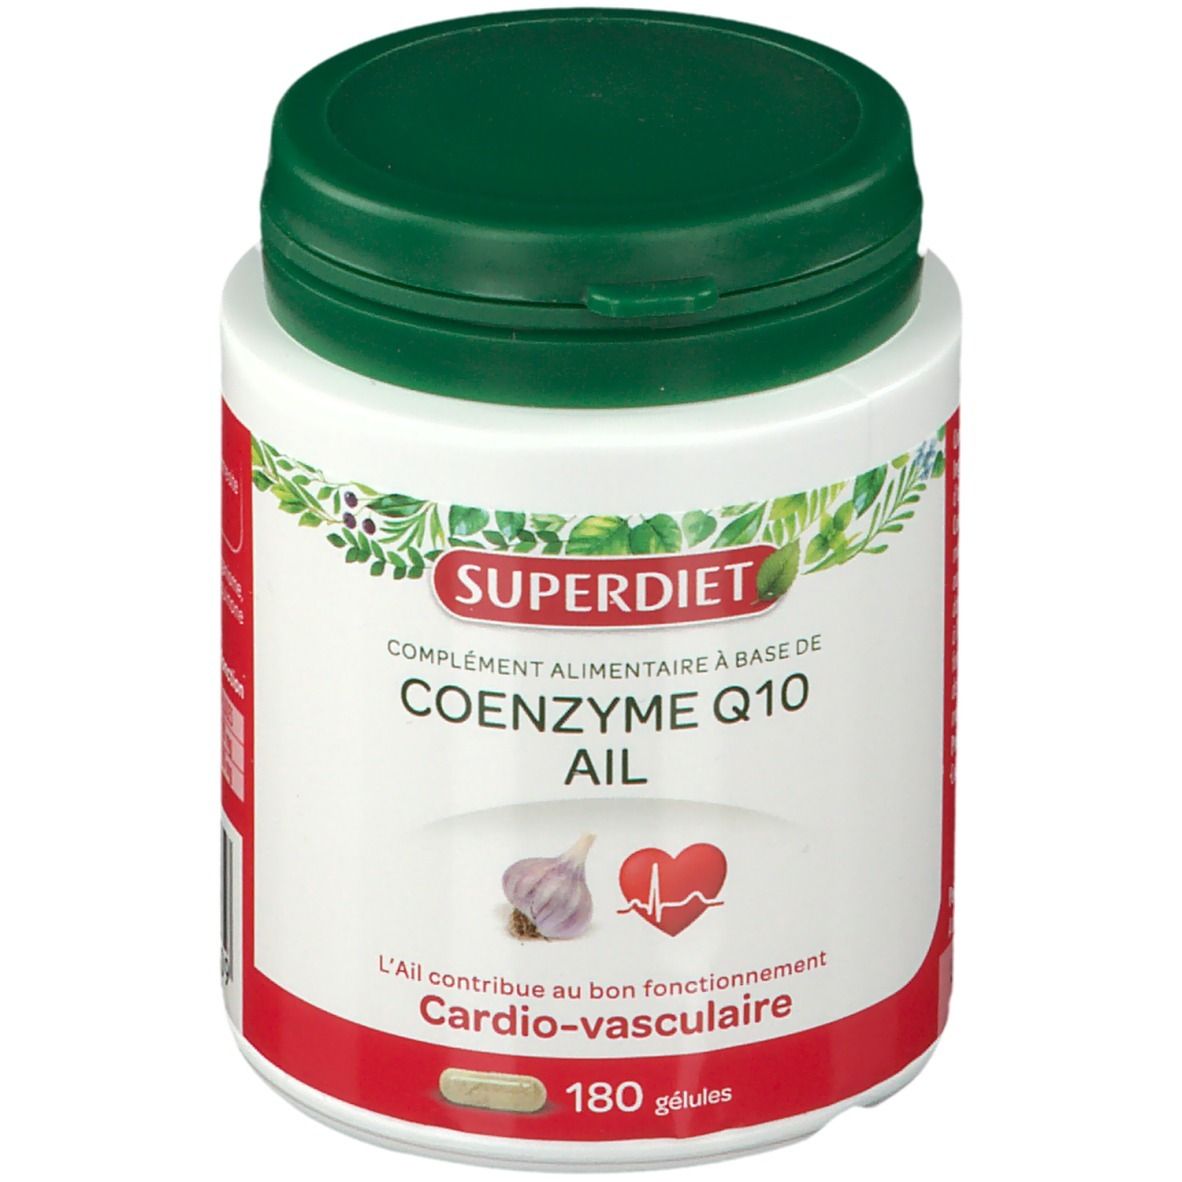 Superdiet Coenzyme Q10 + Ail Cardio-vasculaire